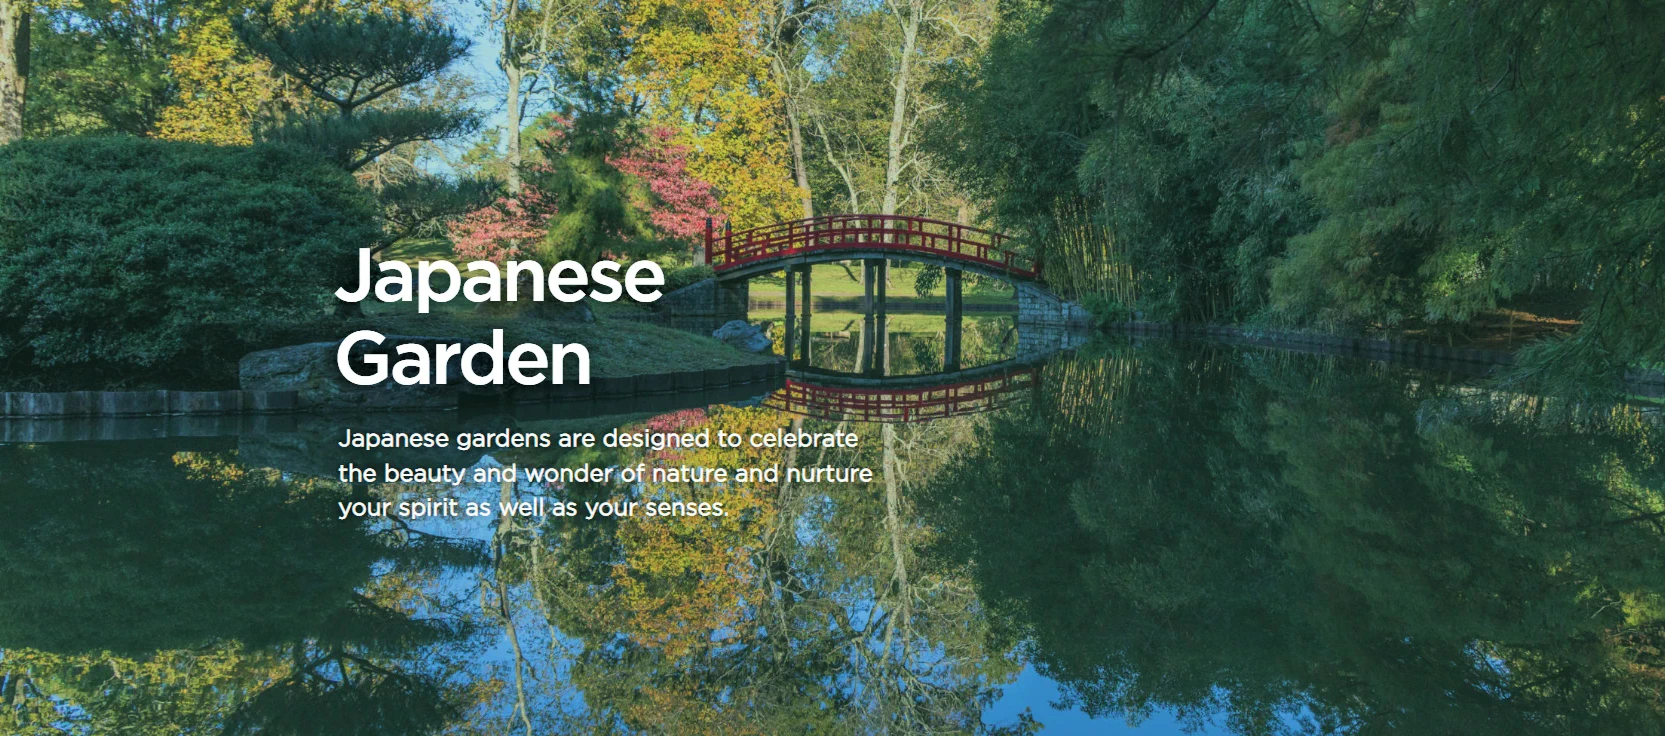 Memphis Botanic Garden - Japanese Garden Celebrates 70 Years 